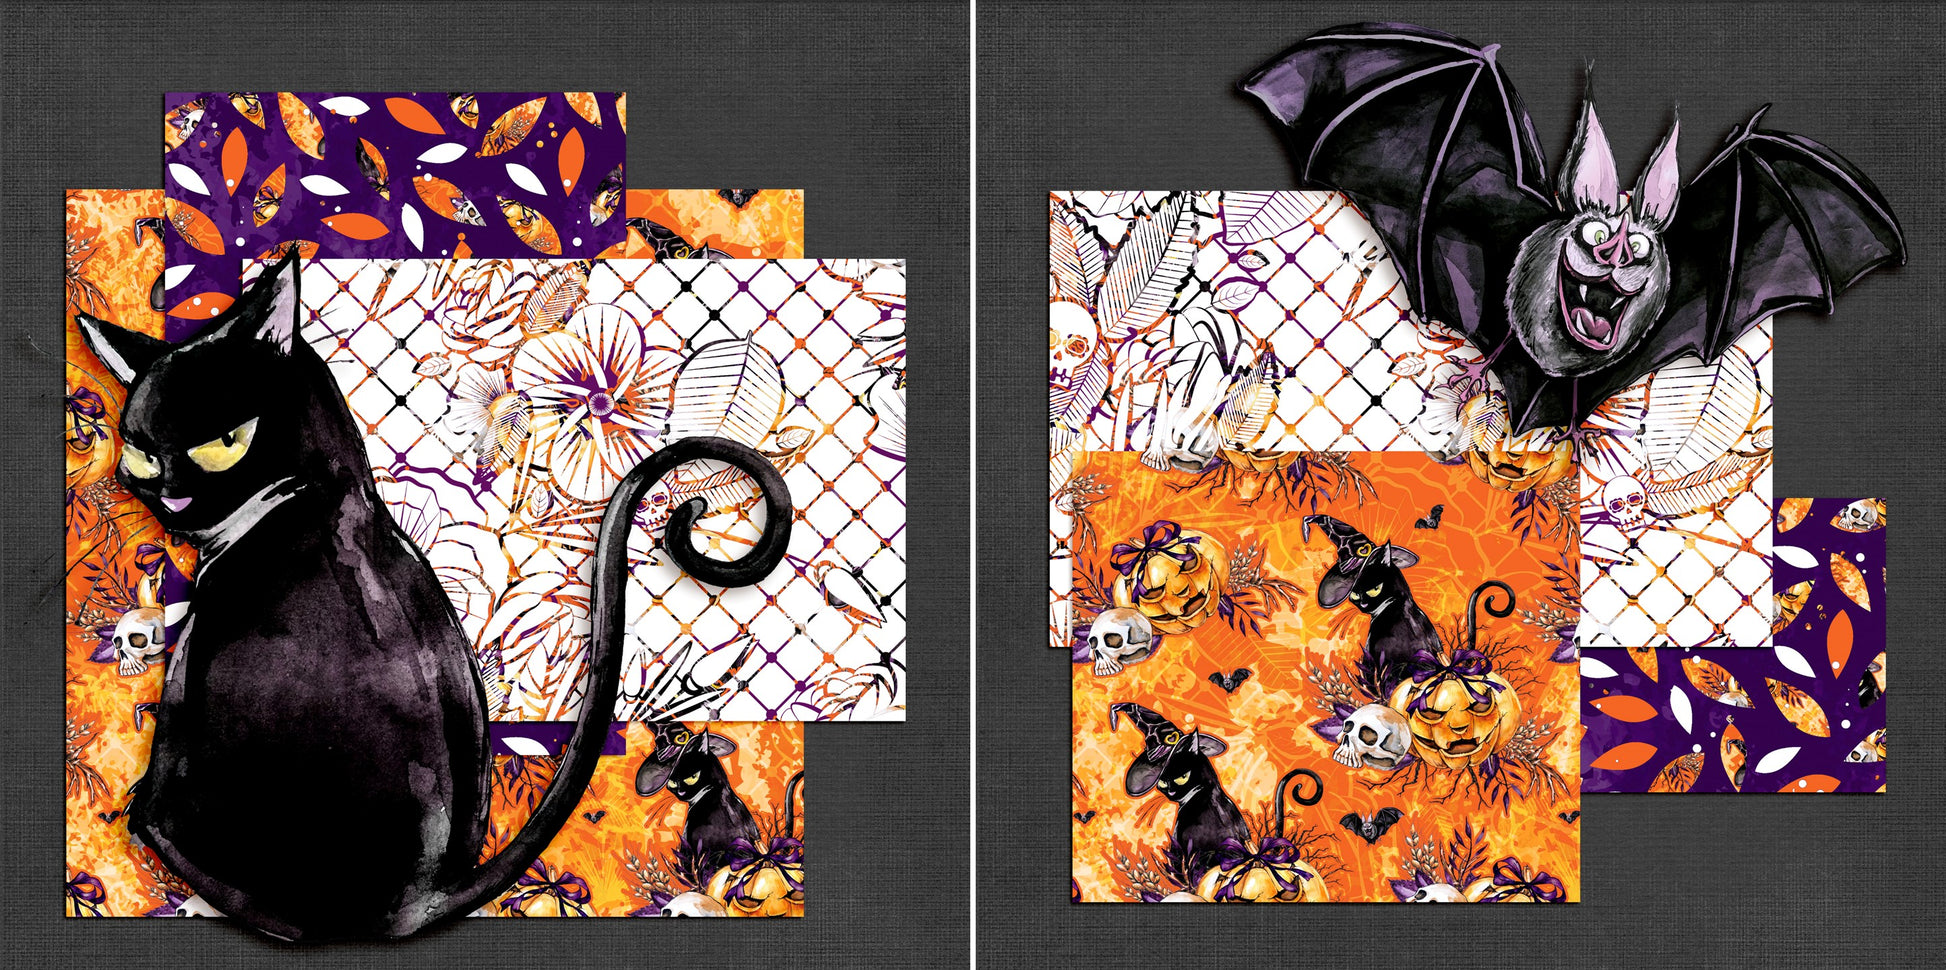 Black Cats & Bats NPM - 5011 - EZscrapbooks Scrapbook Layouts Halloween